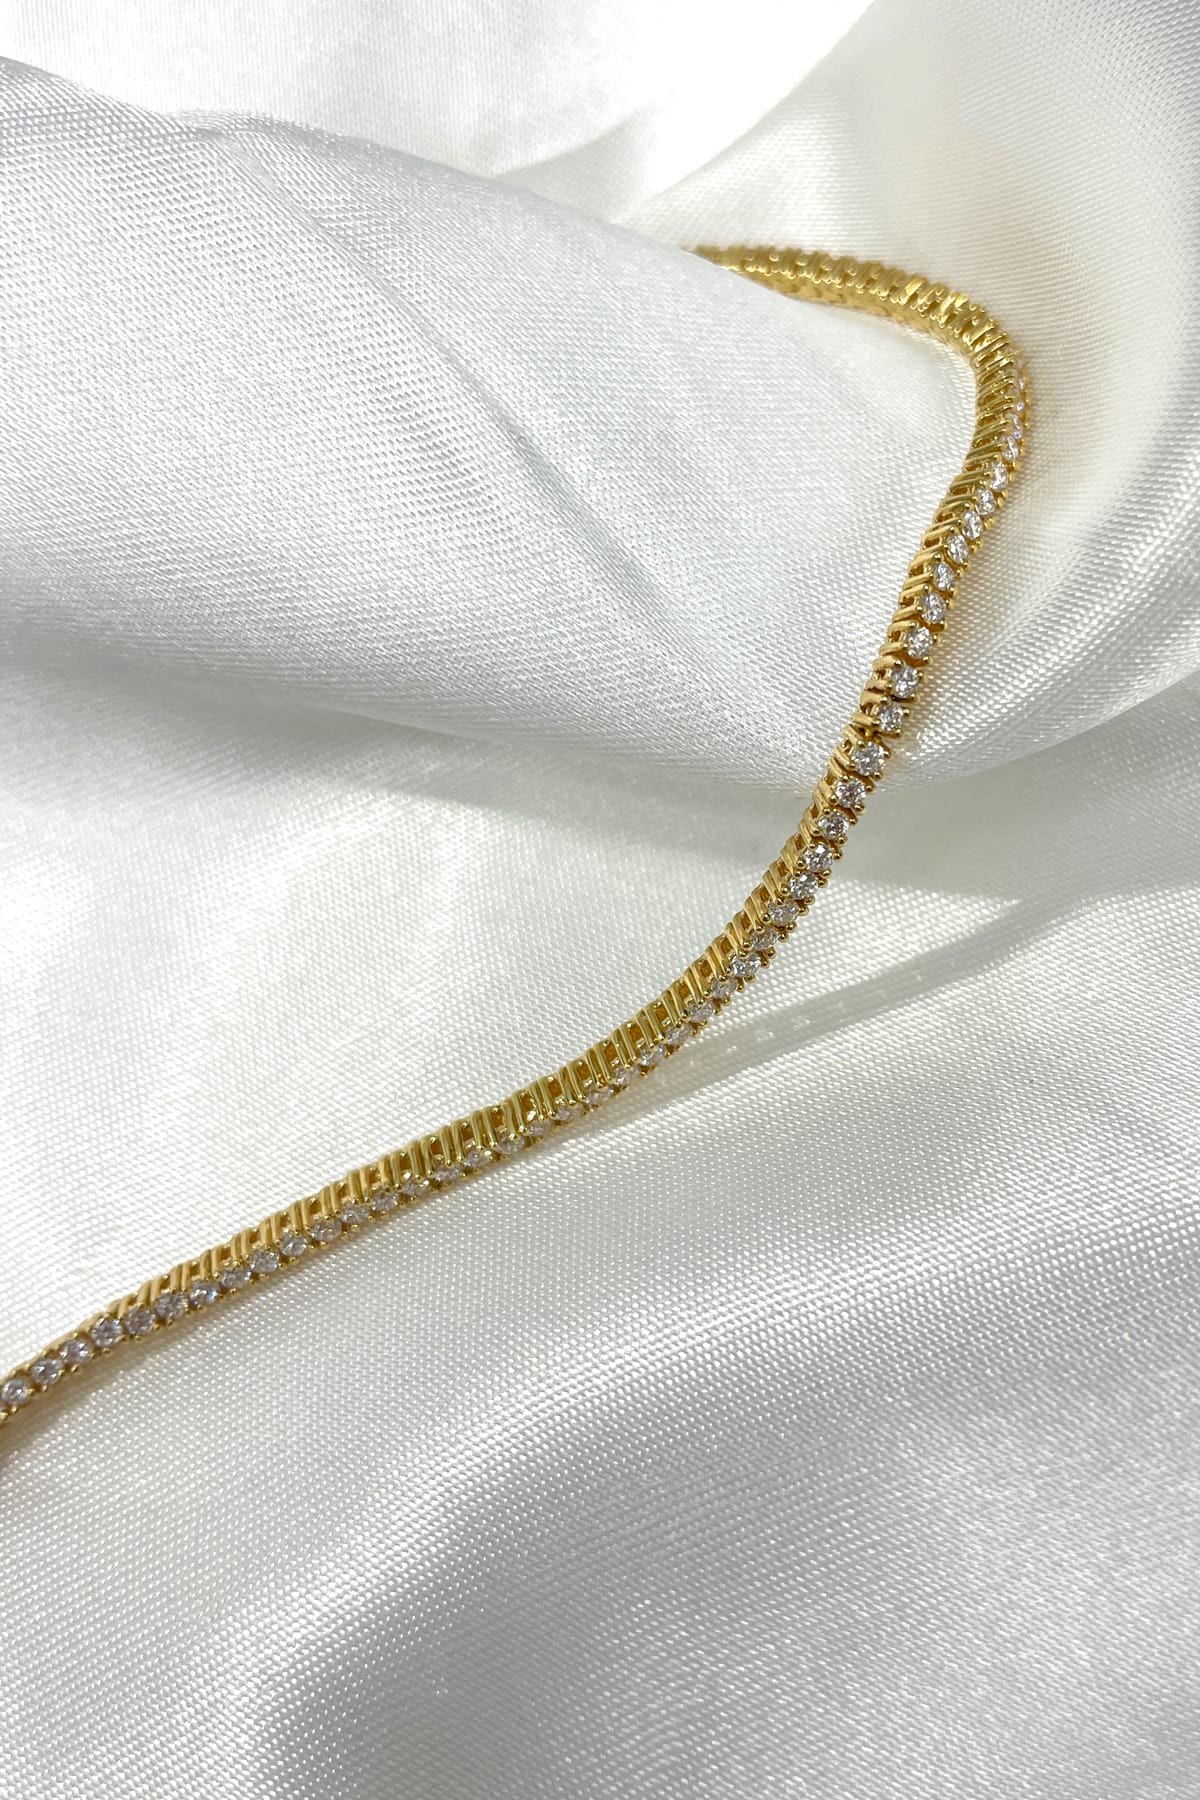 18 Carat Yellow Gold Diamond Set Tennis Bracelet available at LeGassick Diamonds and Jewellery Gold Coast, Australia.